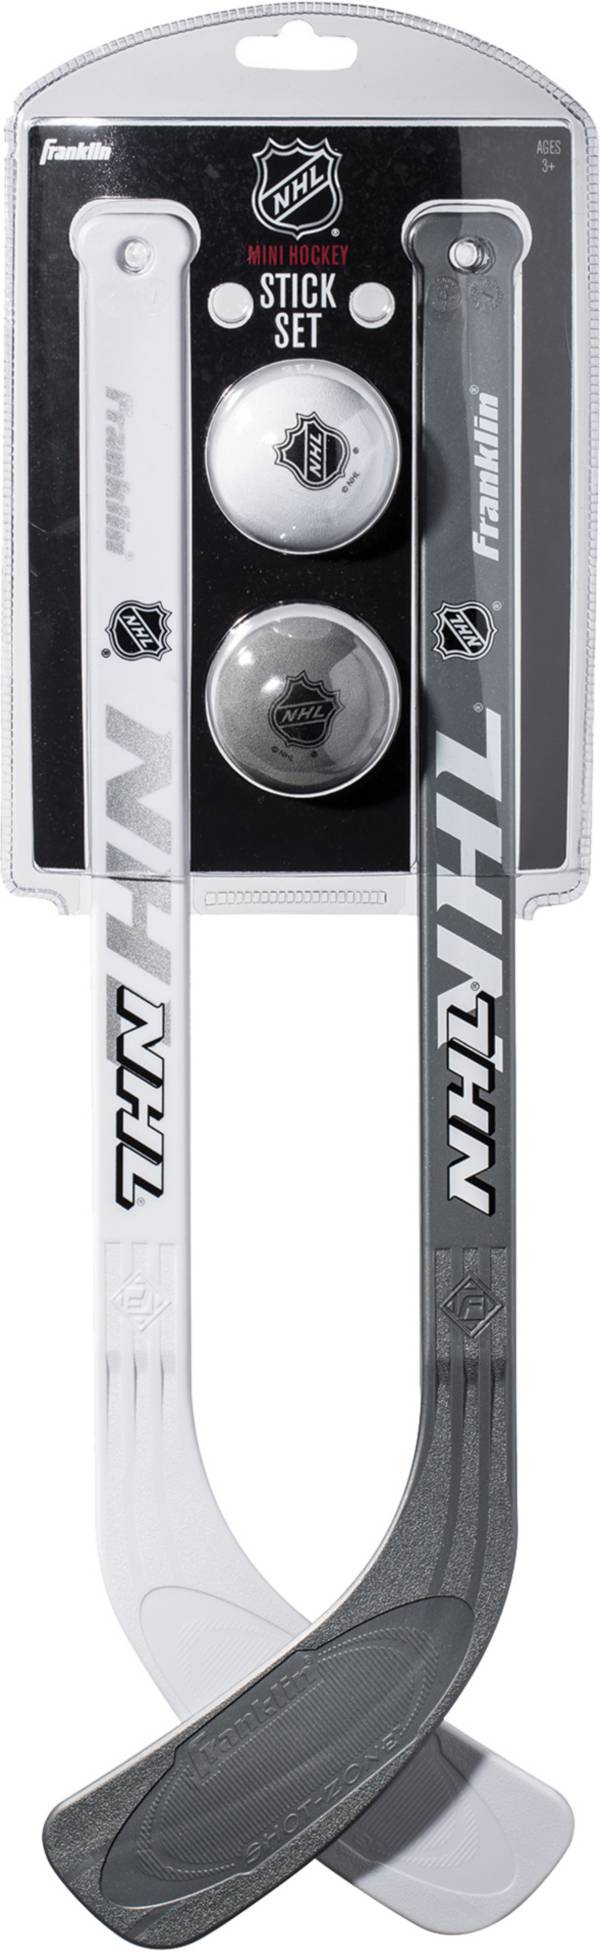 Franklin NHL Mini Player Street Hockey Stick and Ball Set product image